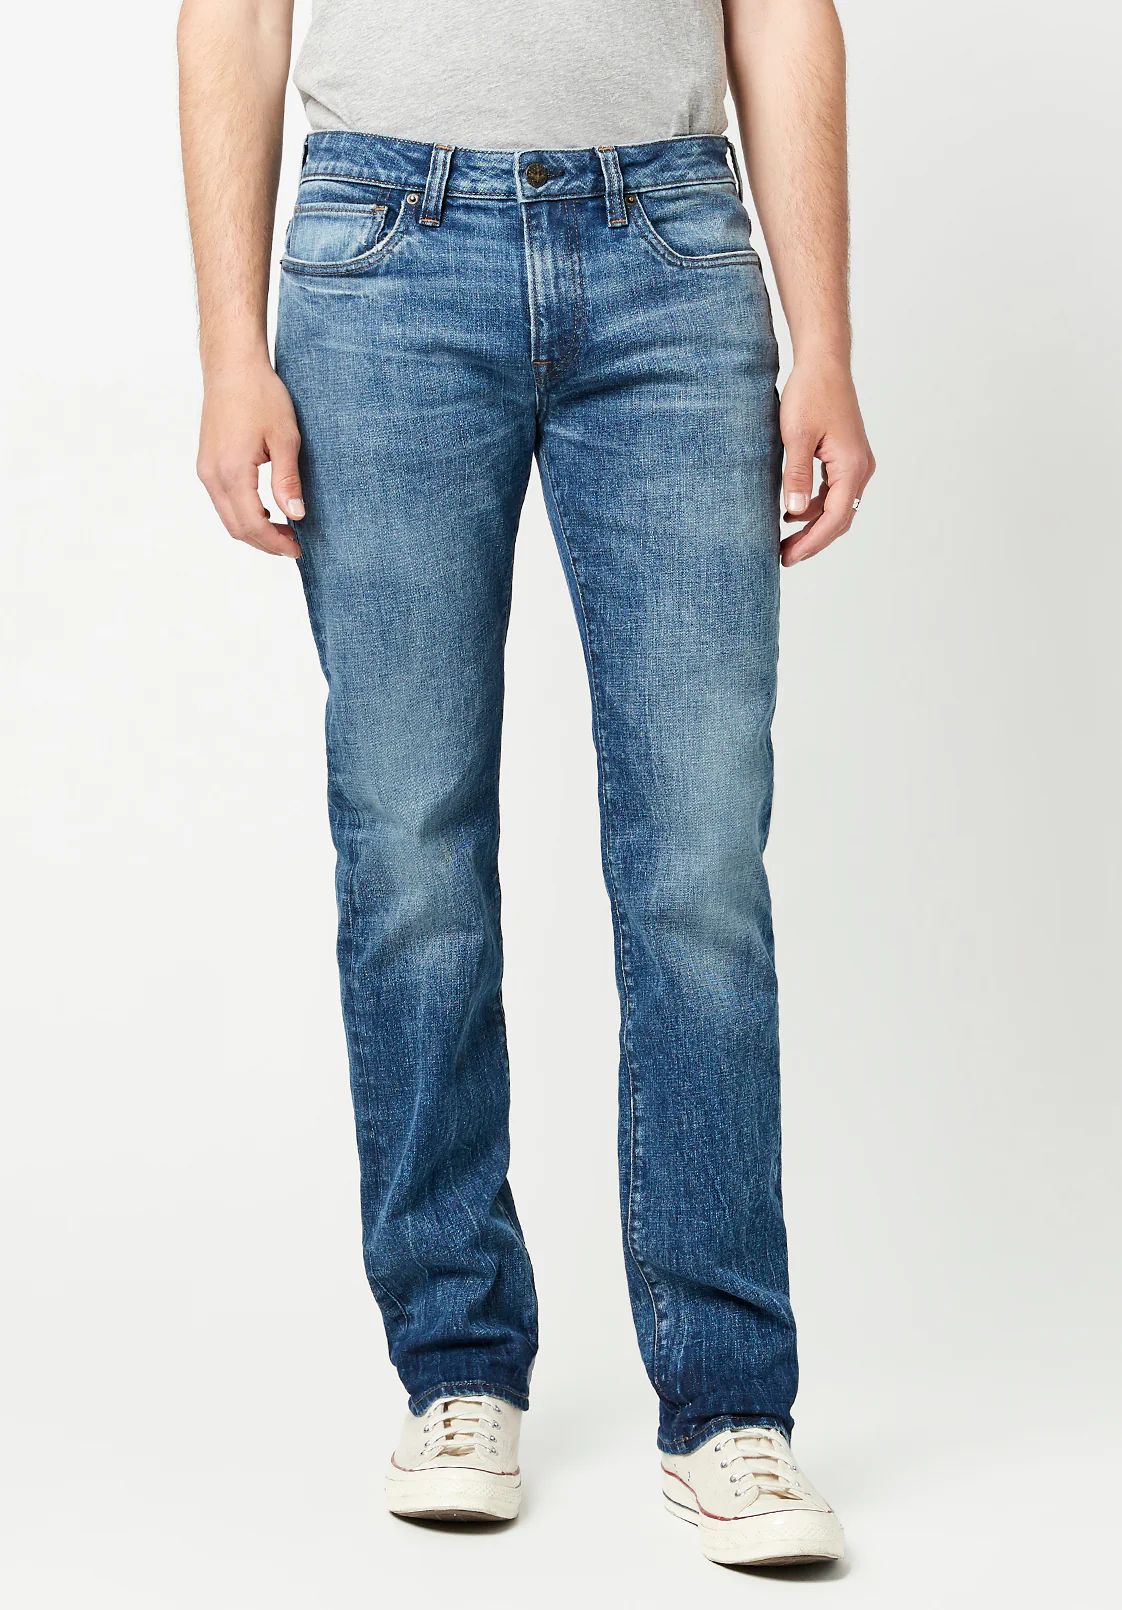 STRAIGHT SIX Recycled Cotton Jeans - BM22815 | Buffalo David Bitton